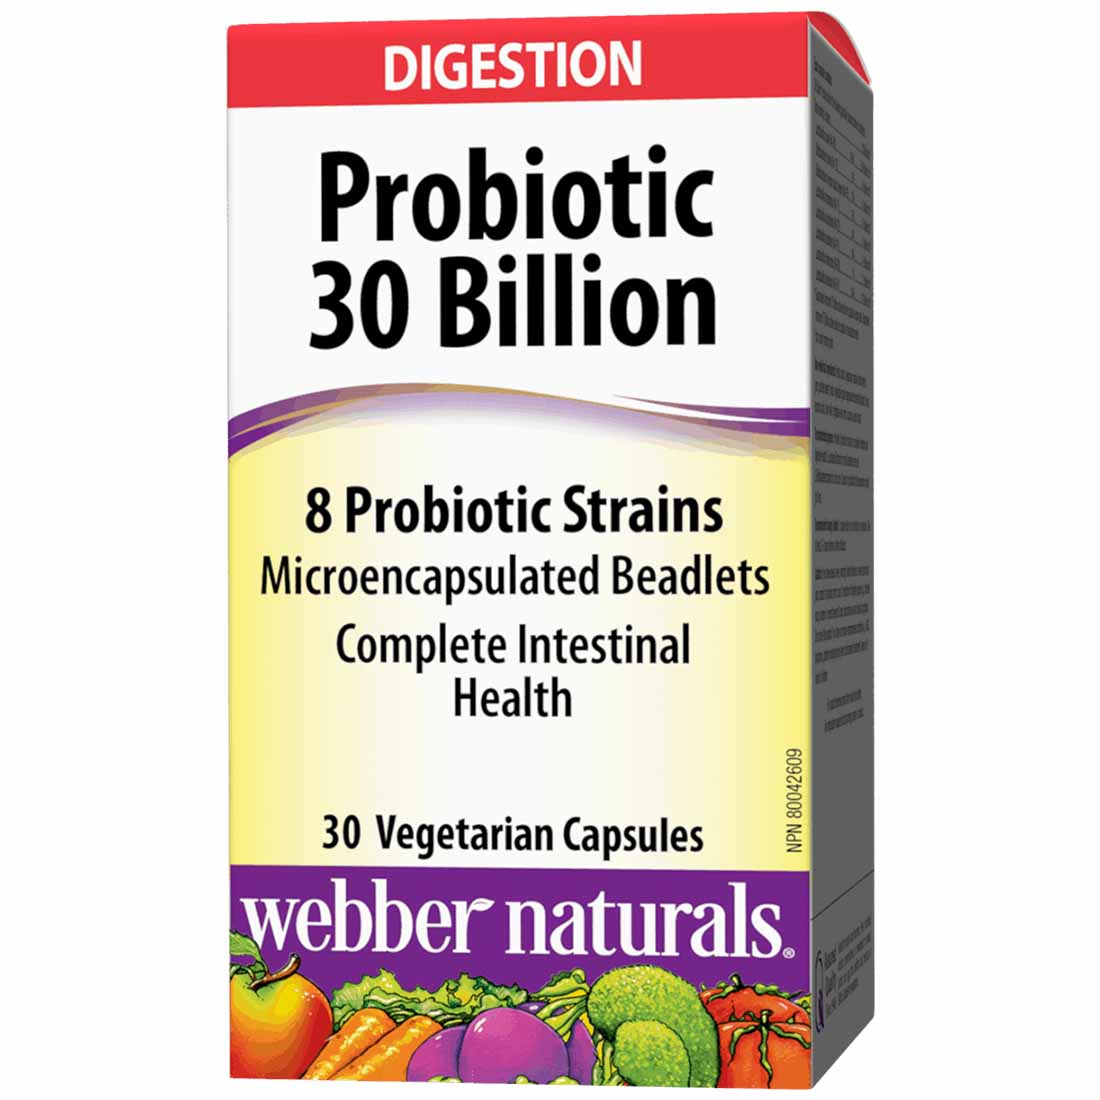 Webber Naturals Probiotic Multi Strain, 30 Billion Active Cells, 8 Probiotic Strains, 30 Capsules